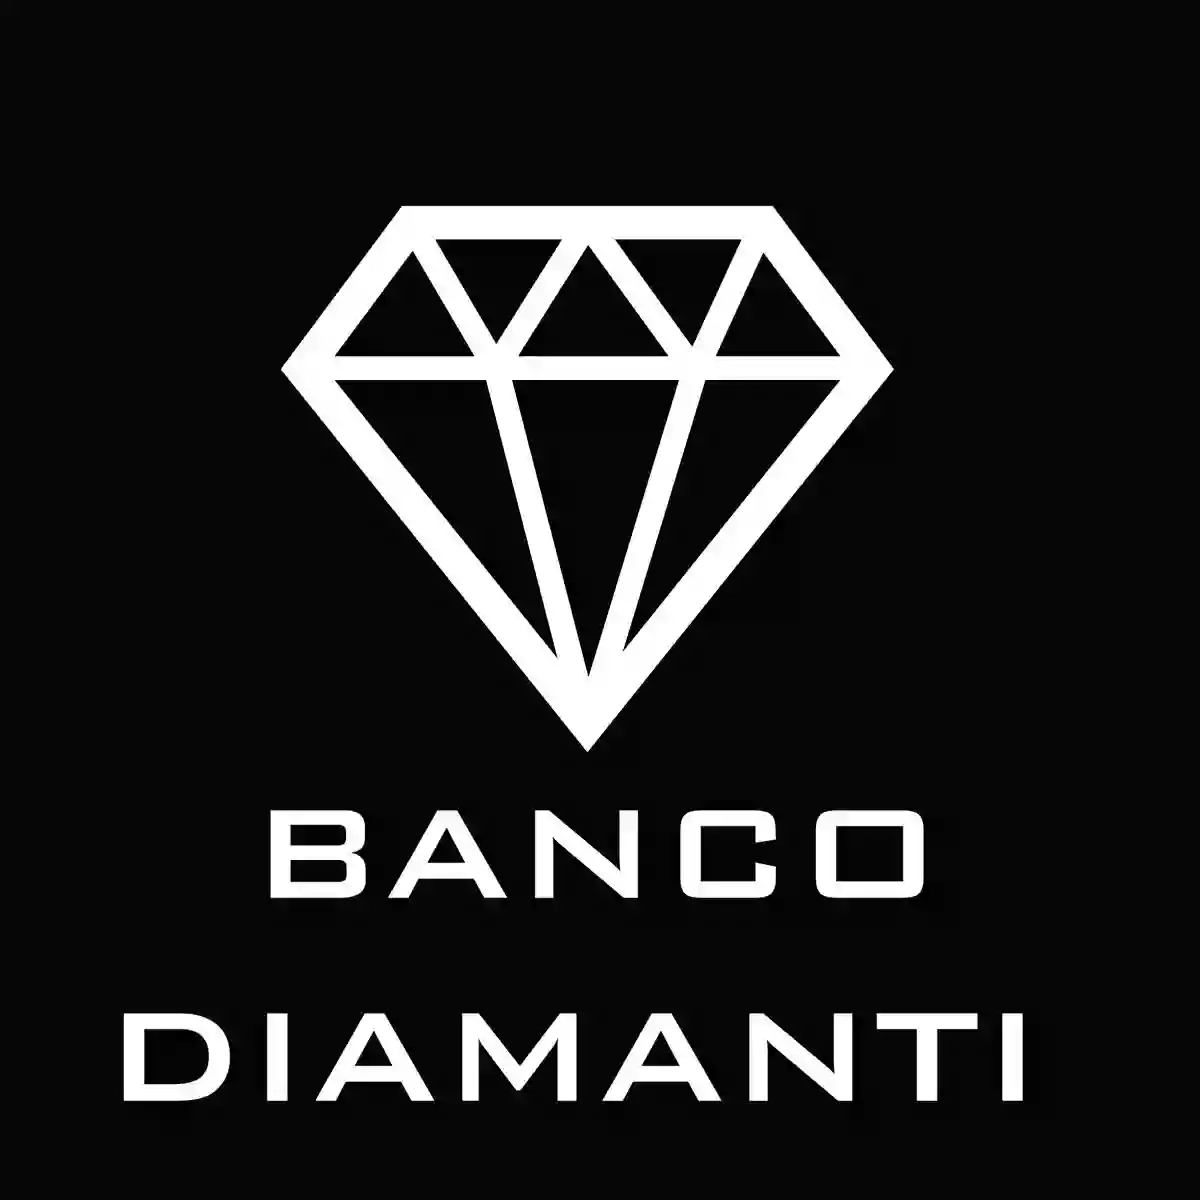 Banco Diamanti